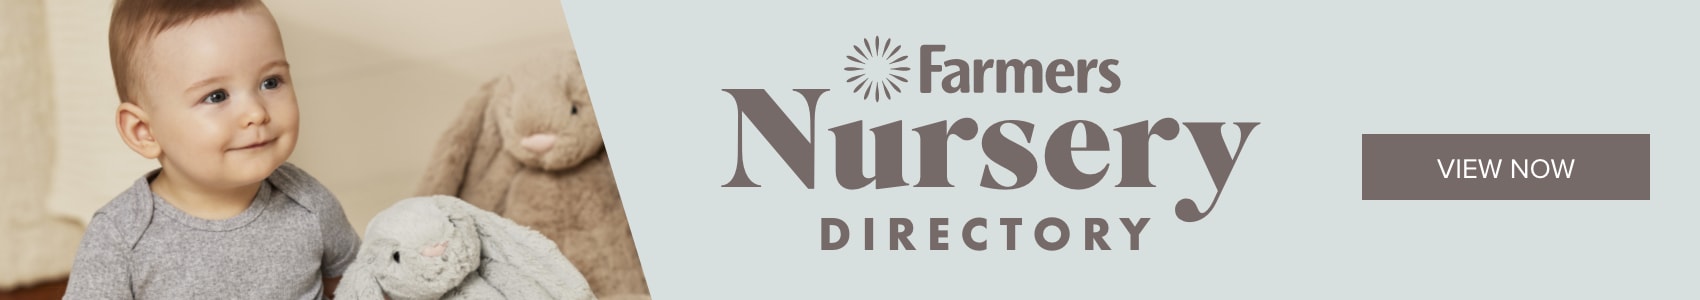 Farmers Nursery Directory